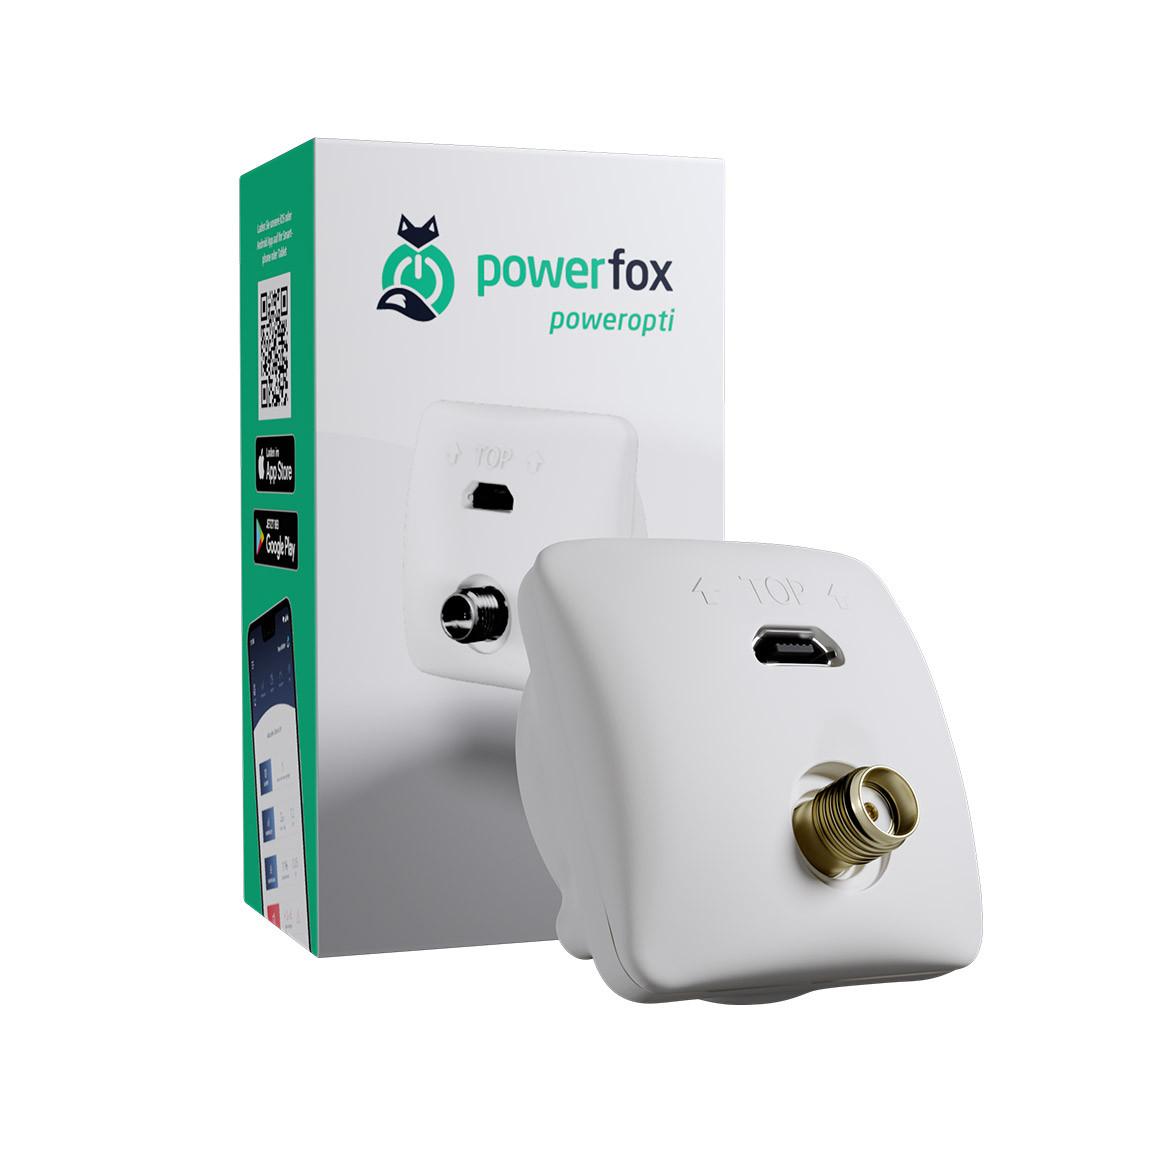 powerfox poweropti mit LED-Diode - Mit Verpackung